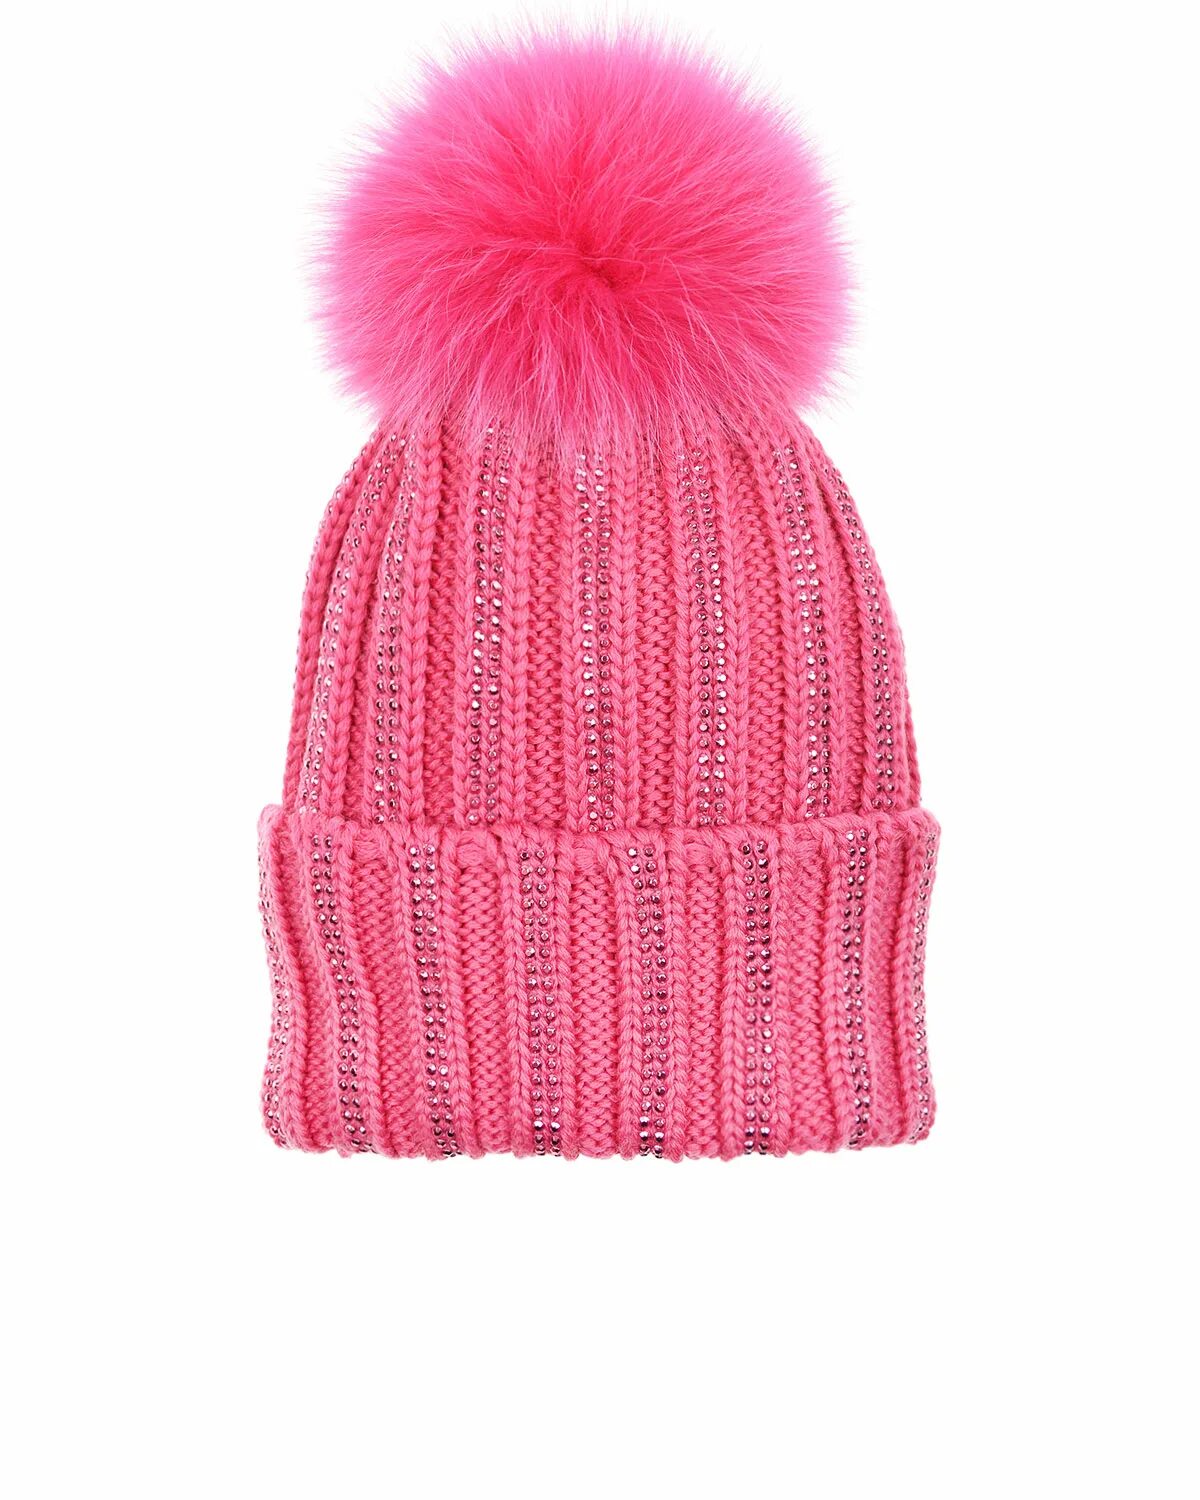 Catya шапки. Розовая шапка. Шапка с помпонами для девочки розовая. Розовая шапка шерстяная.